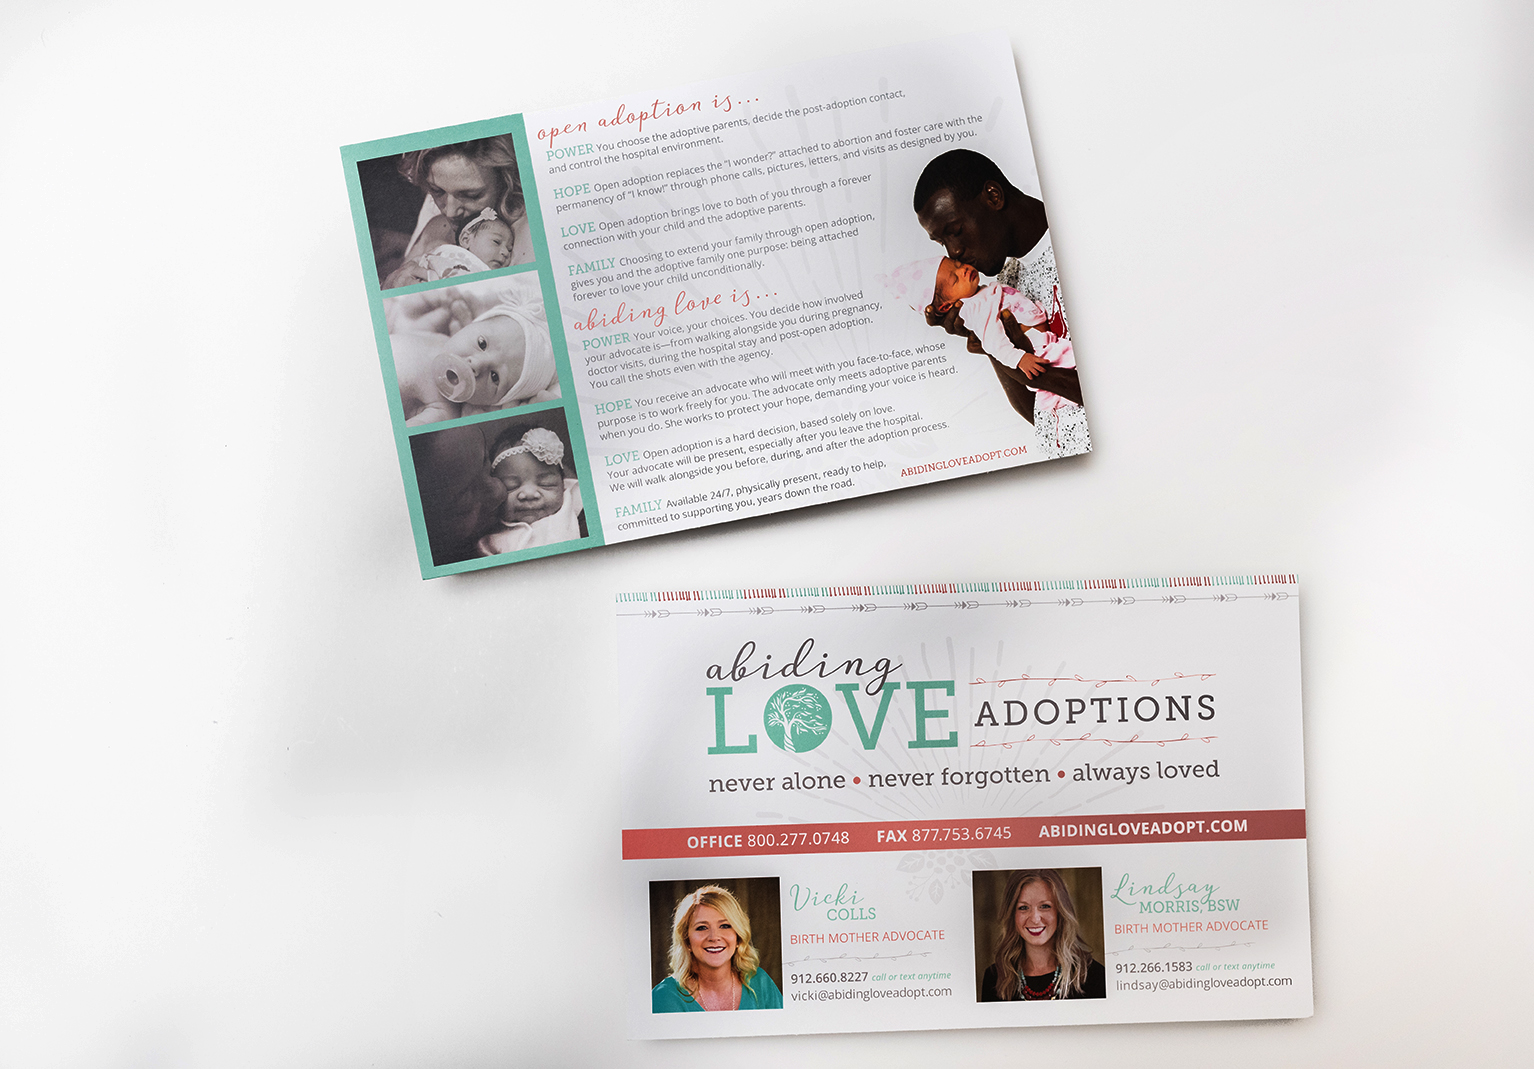 Abiding Love Adoptions Informational Card Design